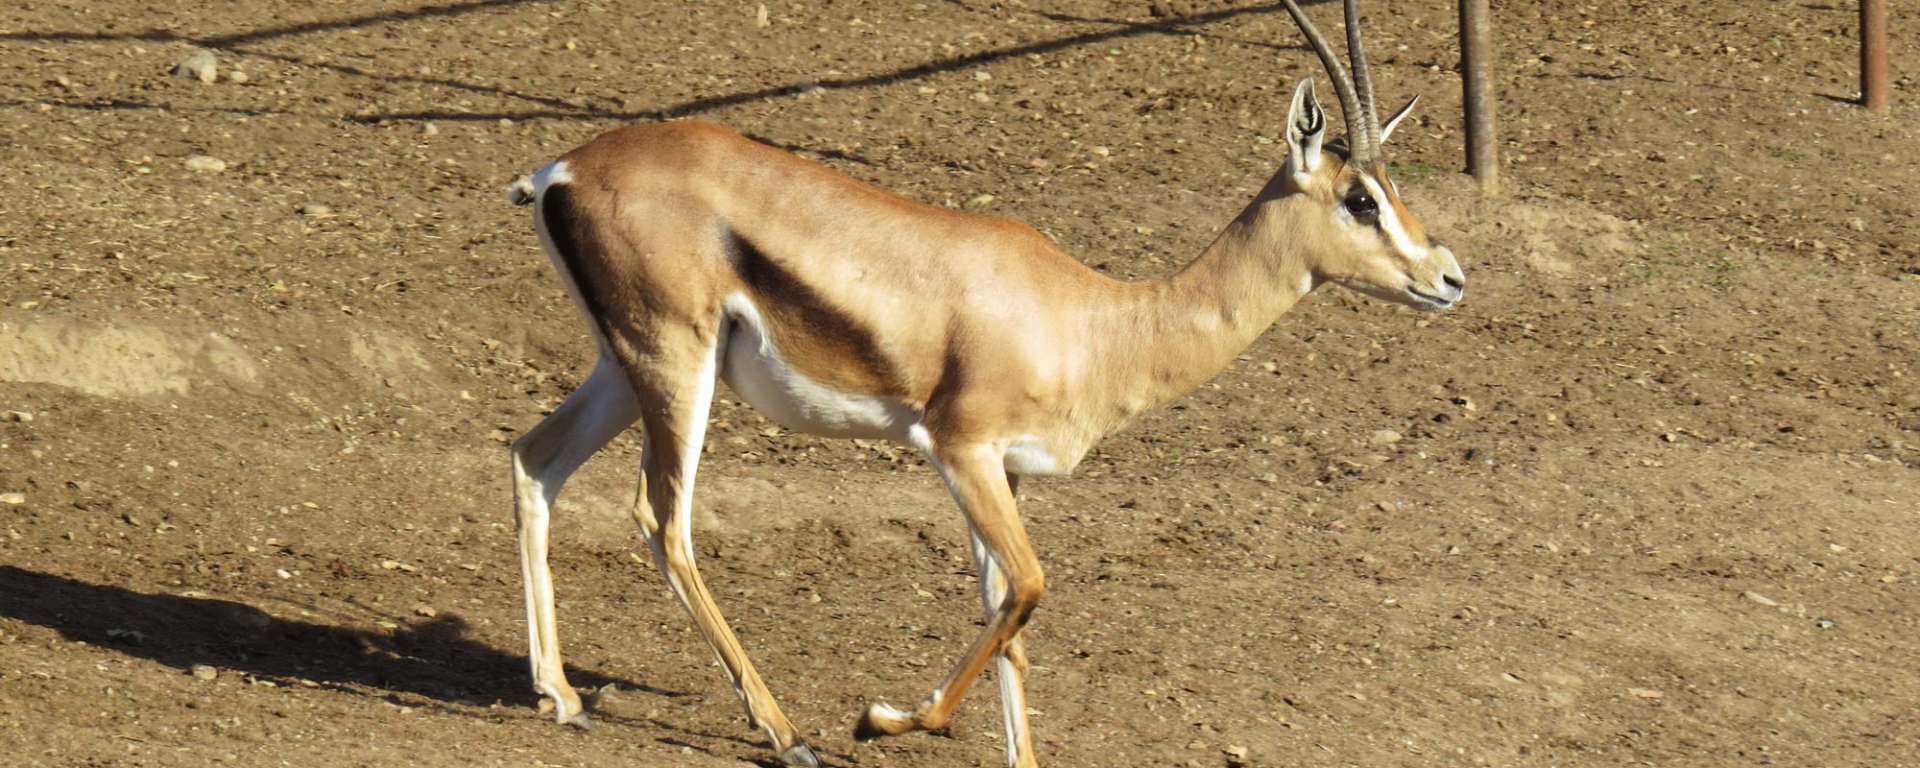 Gazelle Grant S Safari West